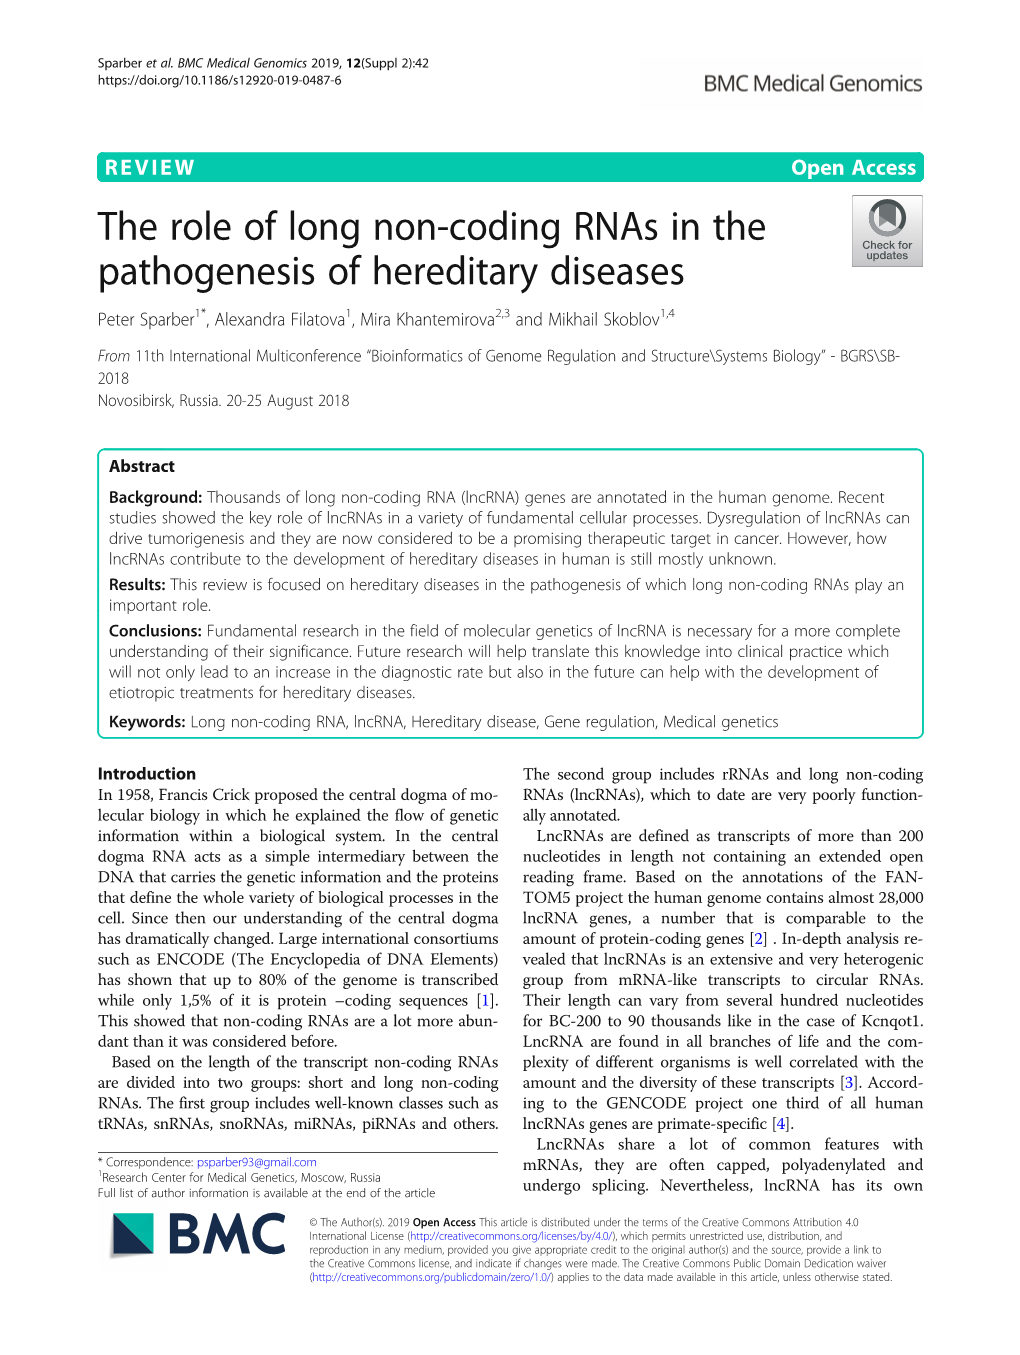 The Role of Long Non-Coding Rnas in the Pathogenesis of Hereditary Diseases Peter Sparber1*, Alexandra Filatova1, Mira Khantemirova2,3 and Mikhail Skoblov1,4